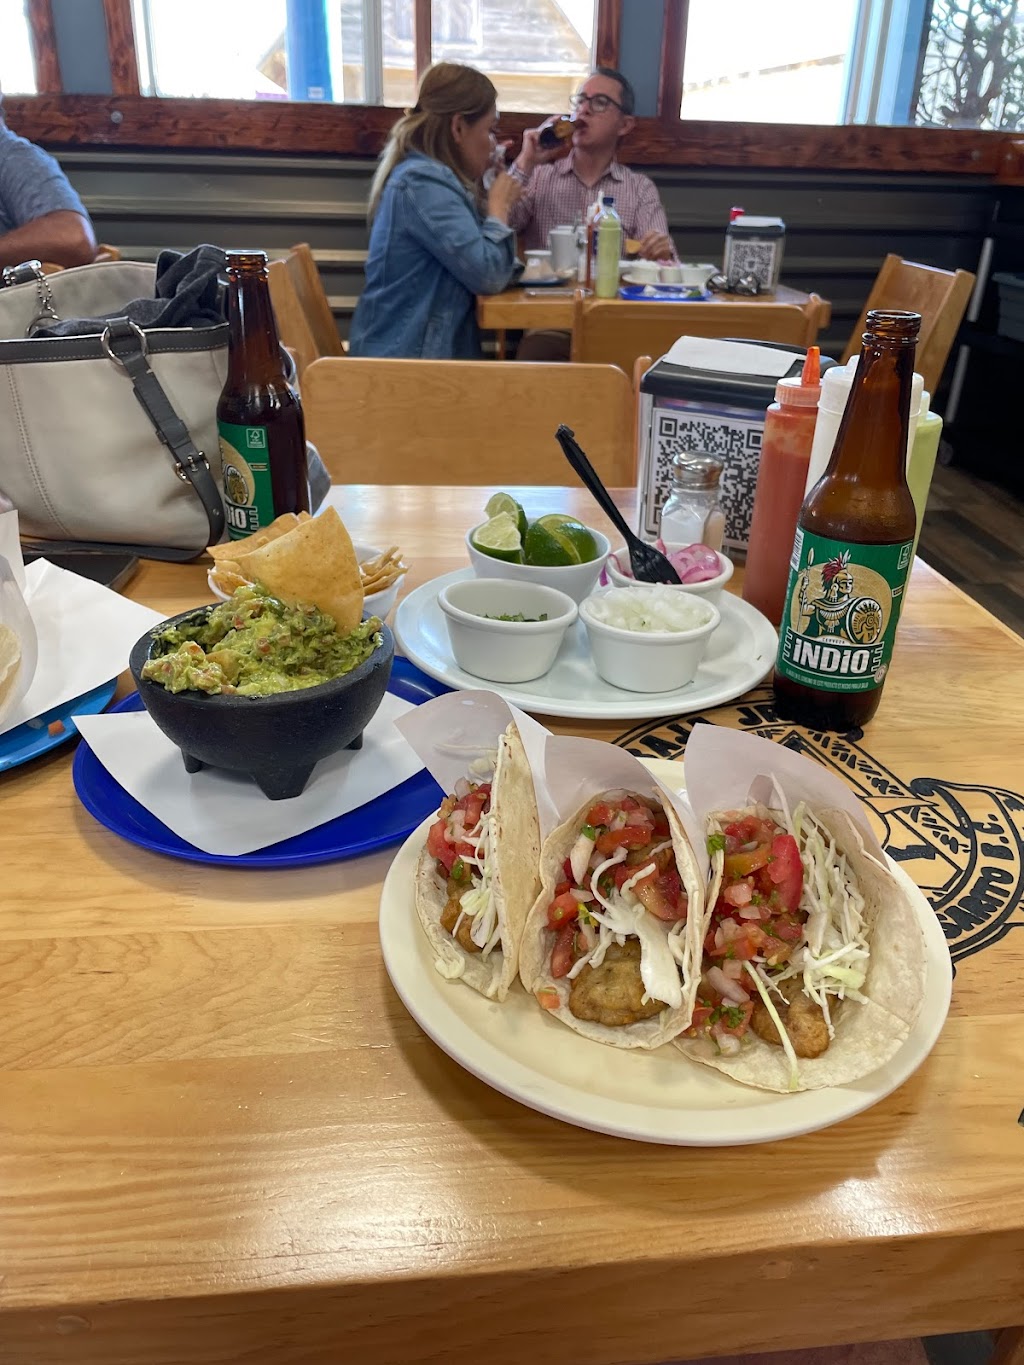 Tacos Baja Jr | Carretera Km. 28.8, Rosarito - Ensenada, Villas de Rosarito, 22713 Playas de Rosarito, B.C., Mexico | Phone: 661 119 7216